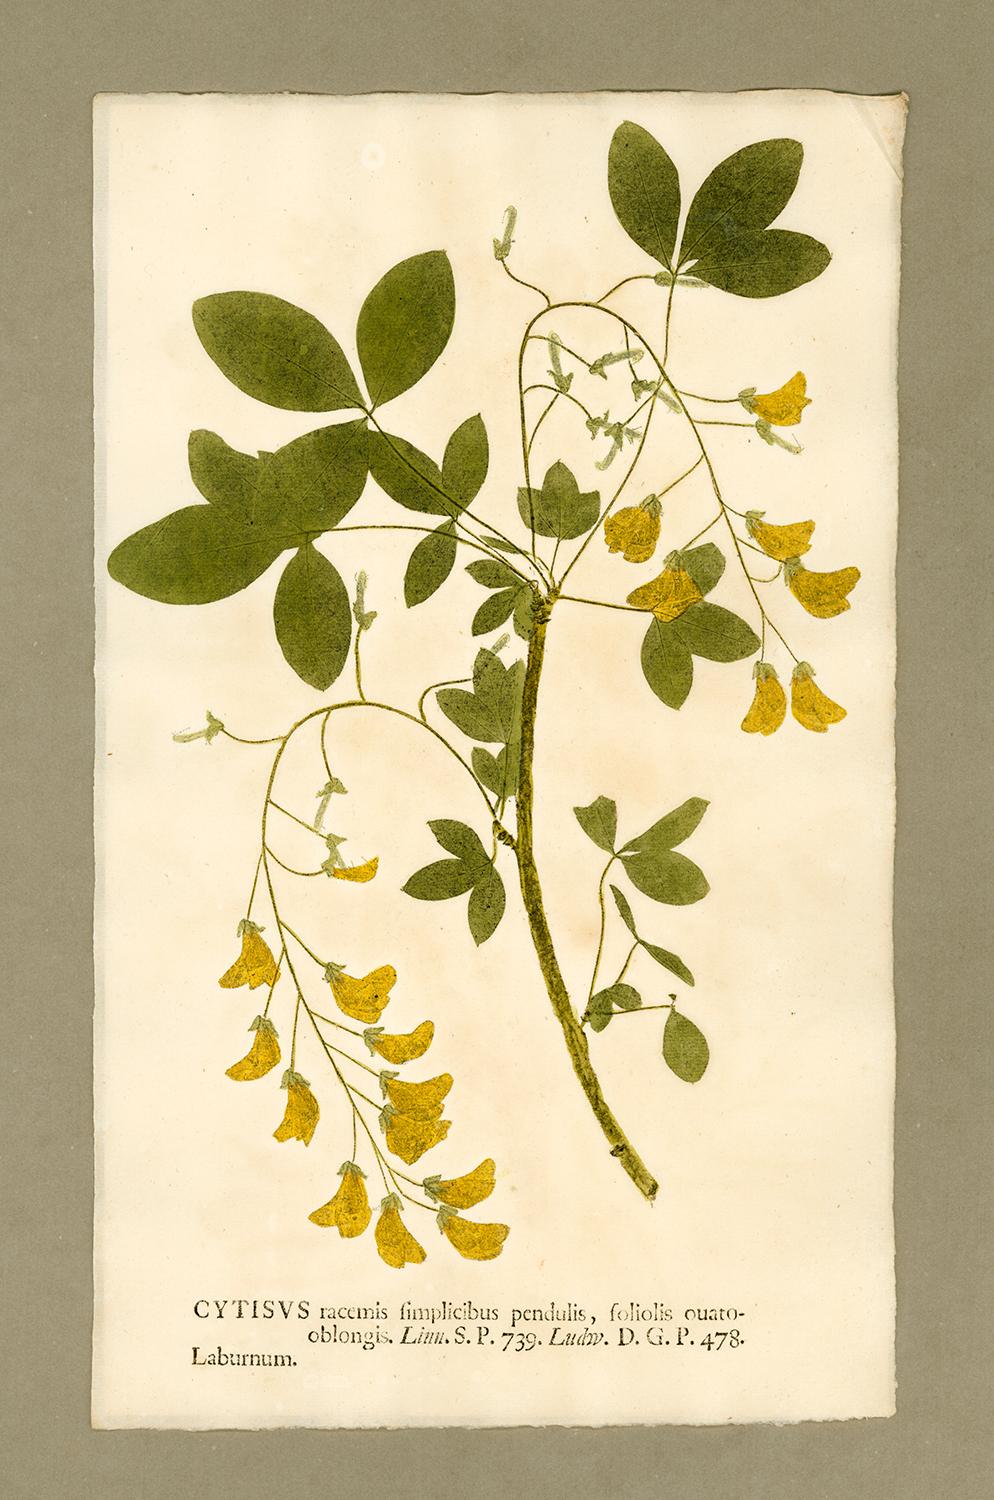 Johann Hieronymus Kniphof  Black and White Photograph - Botanica in Originali, seu Herbarium Vivum - "Nature Printed Plants" -23